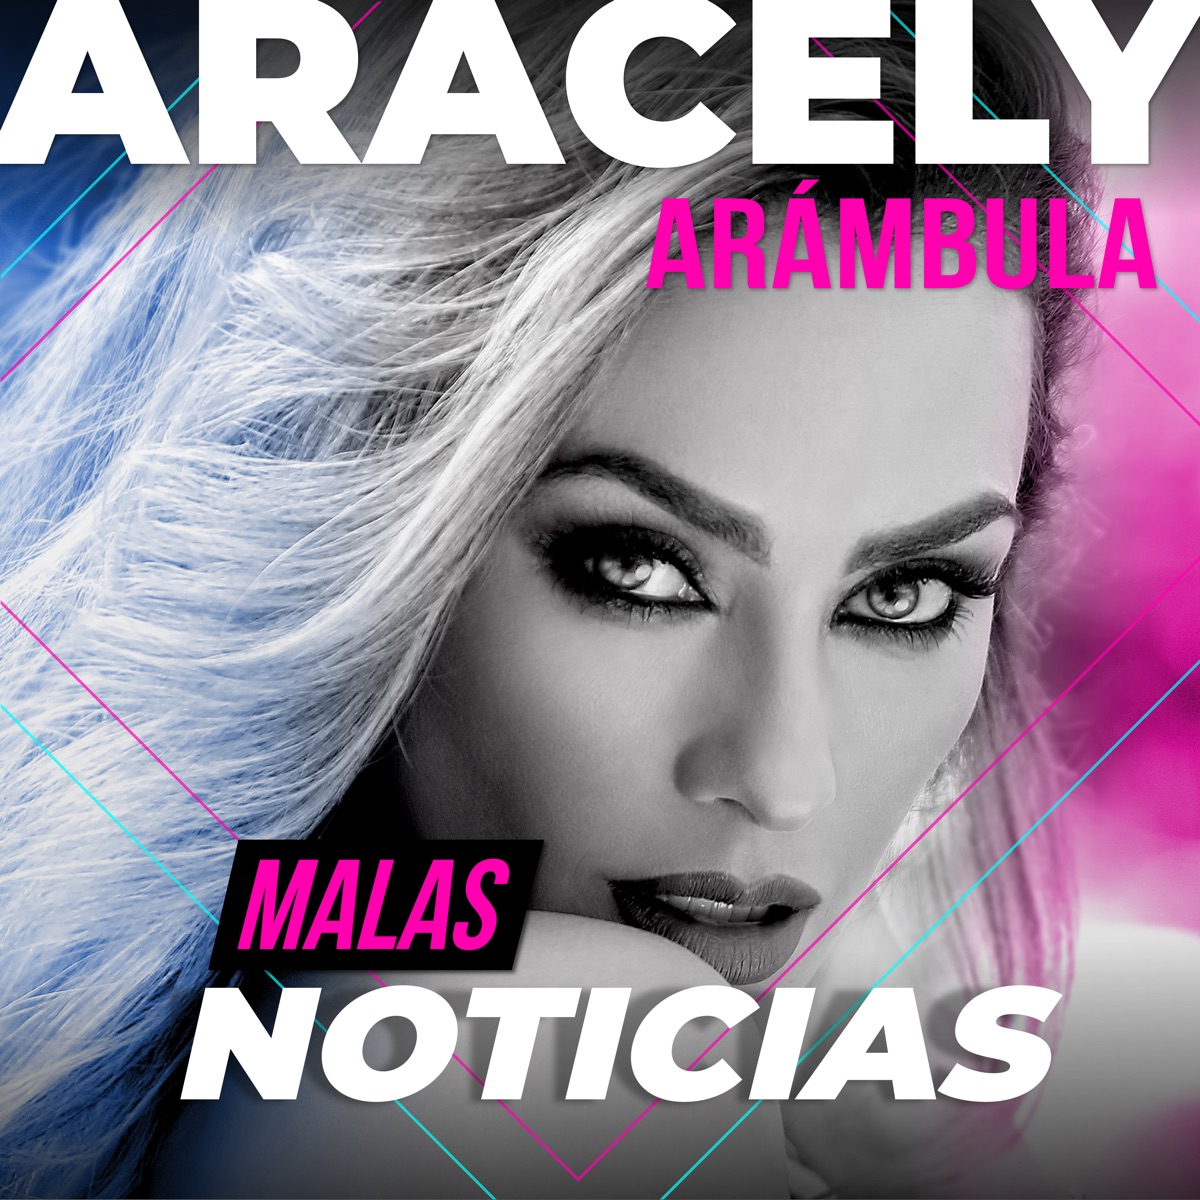 Solo Tuya - Album by Aracely Arambula - Apple Music